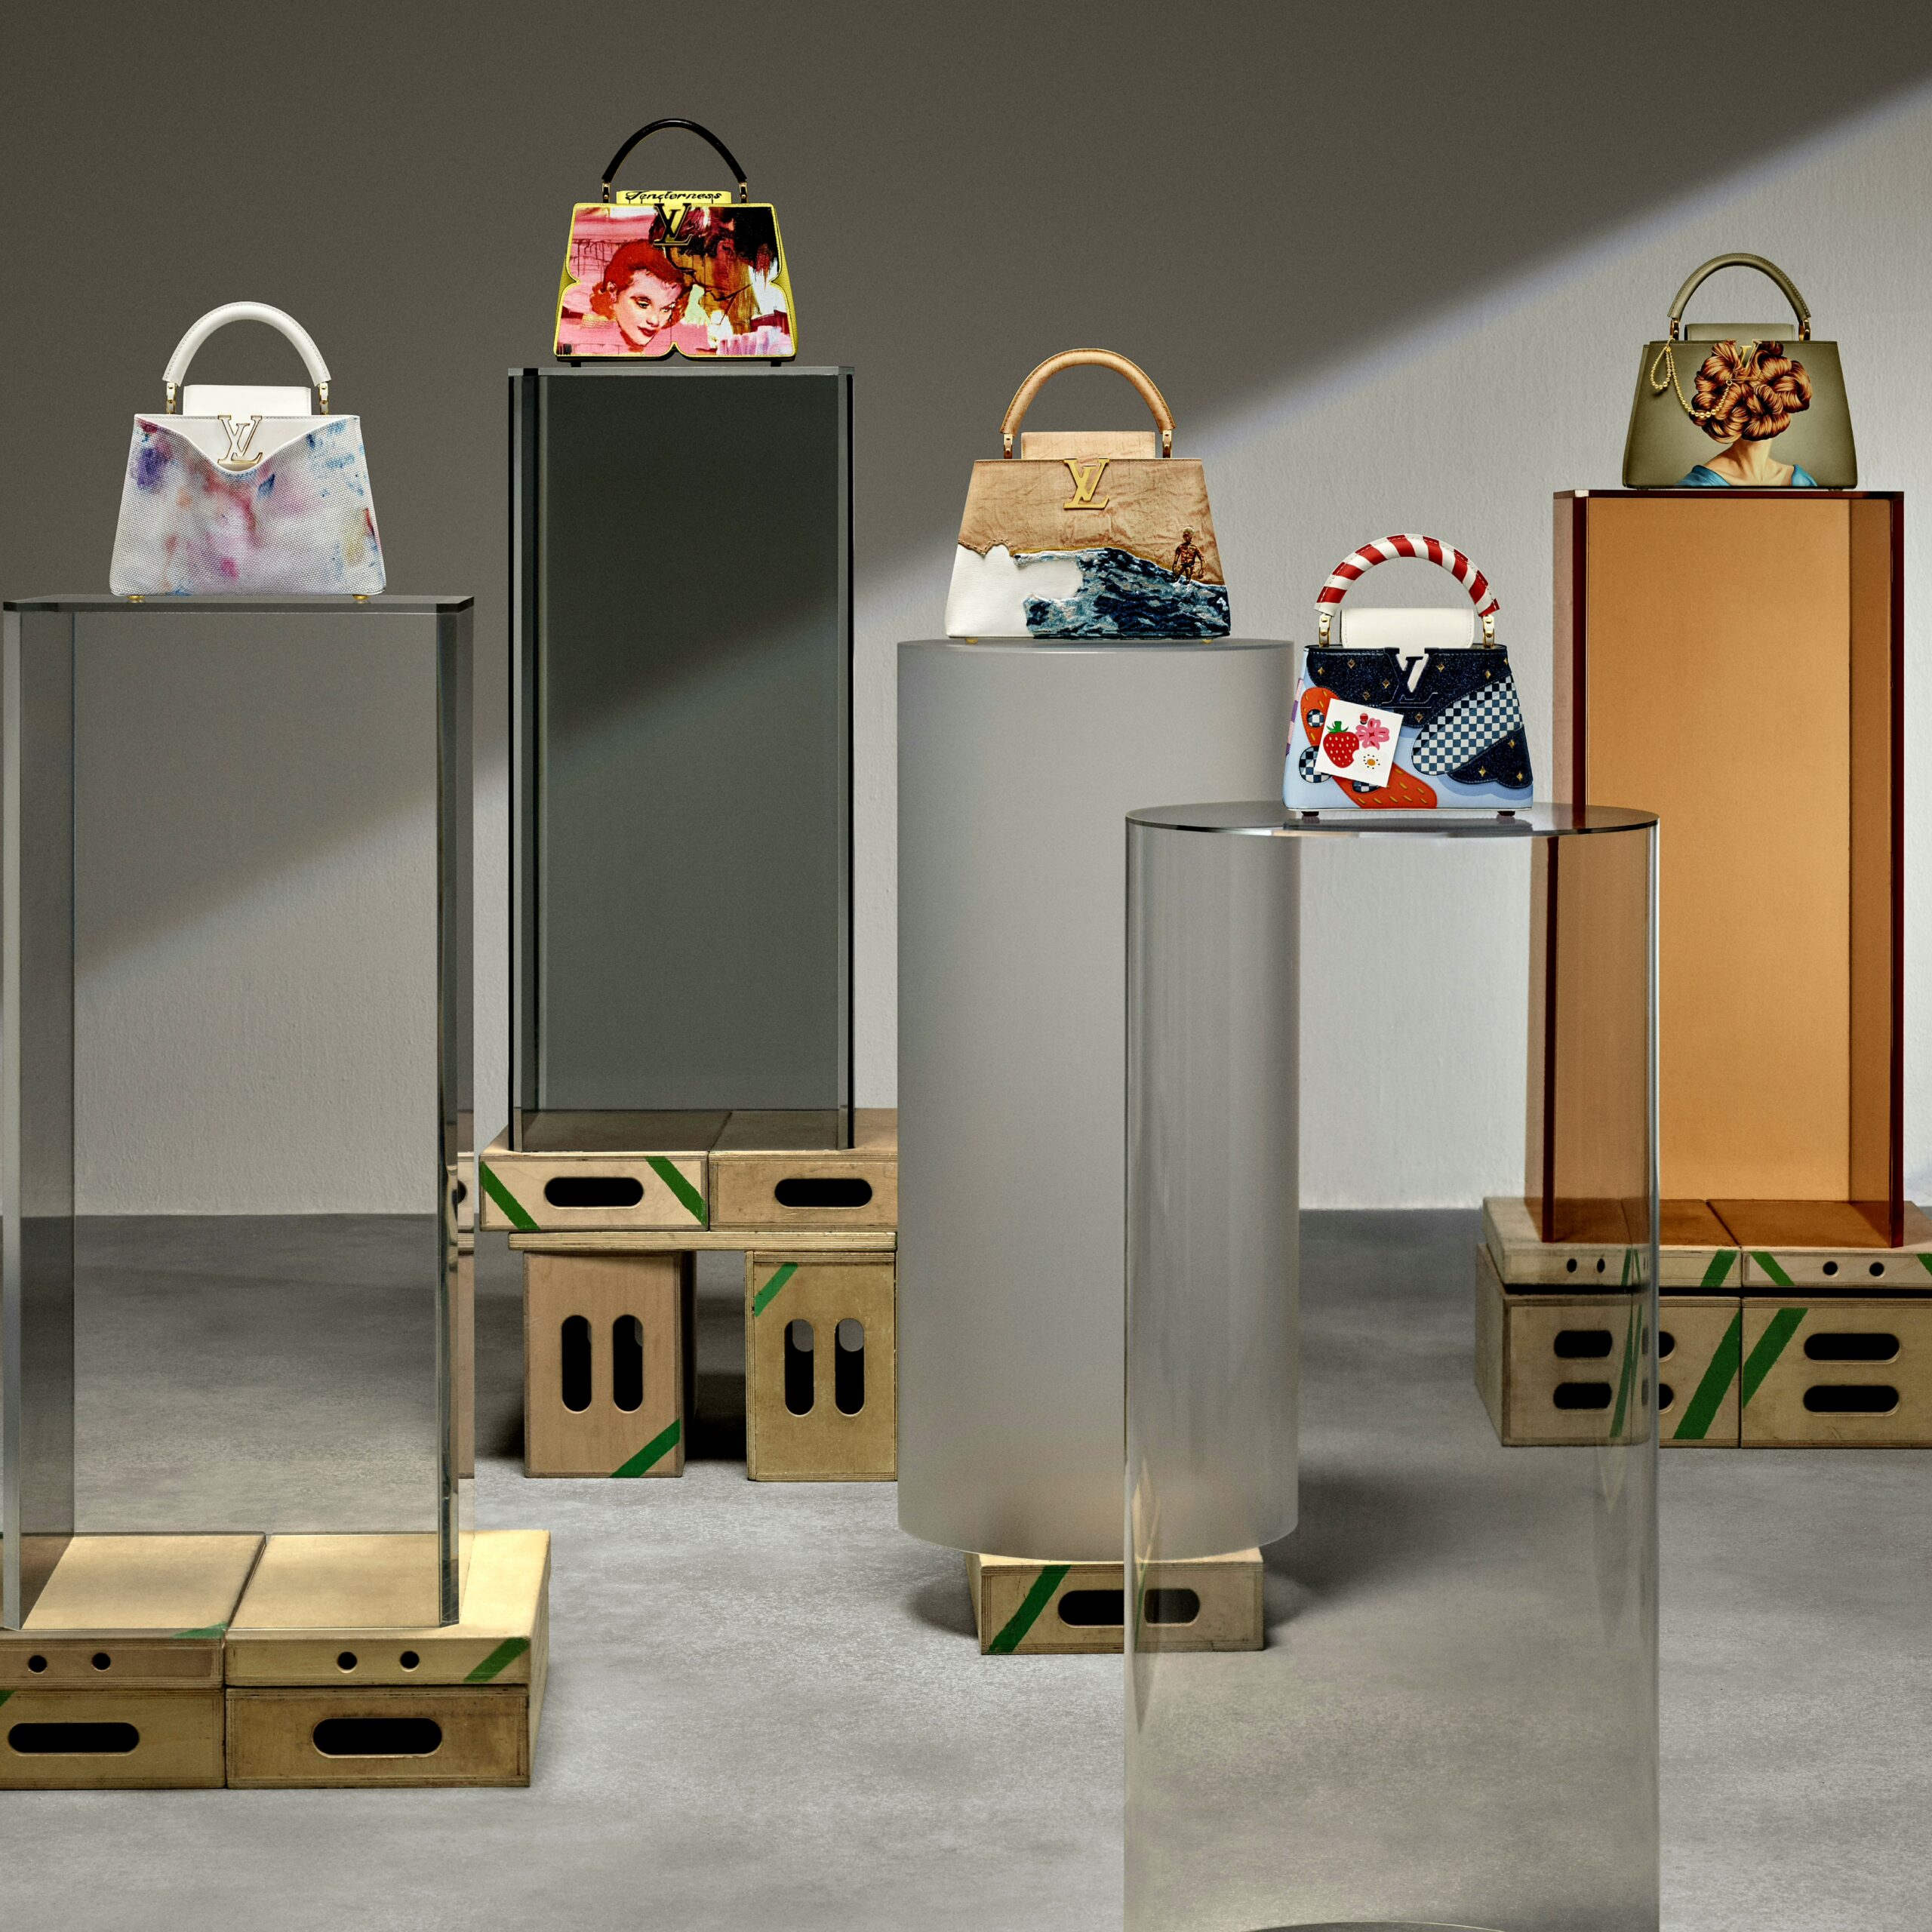 New Era: Introducing Louis Vuitton's Autumn/Winter 2023 bags